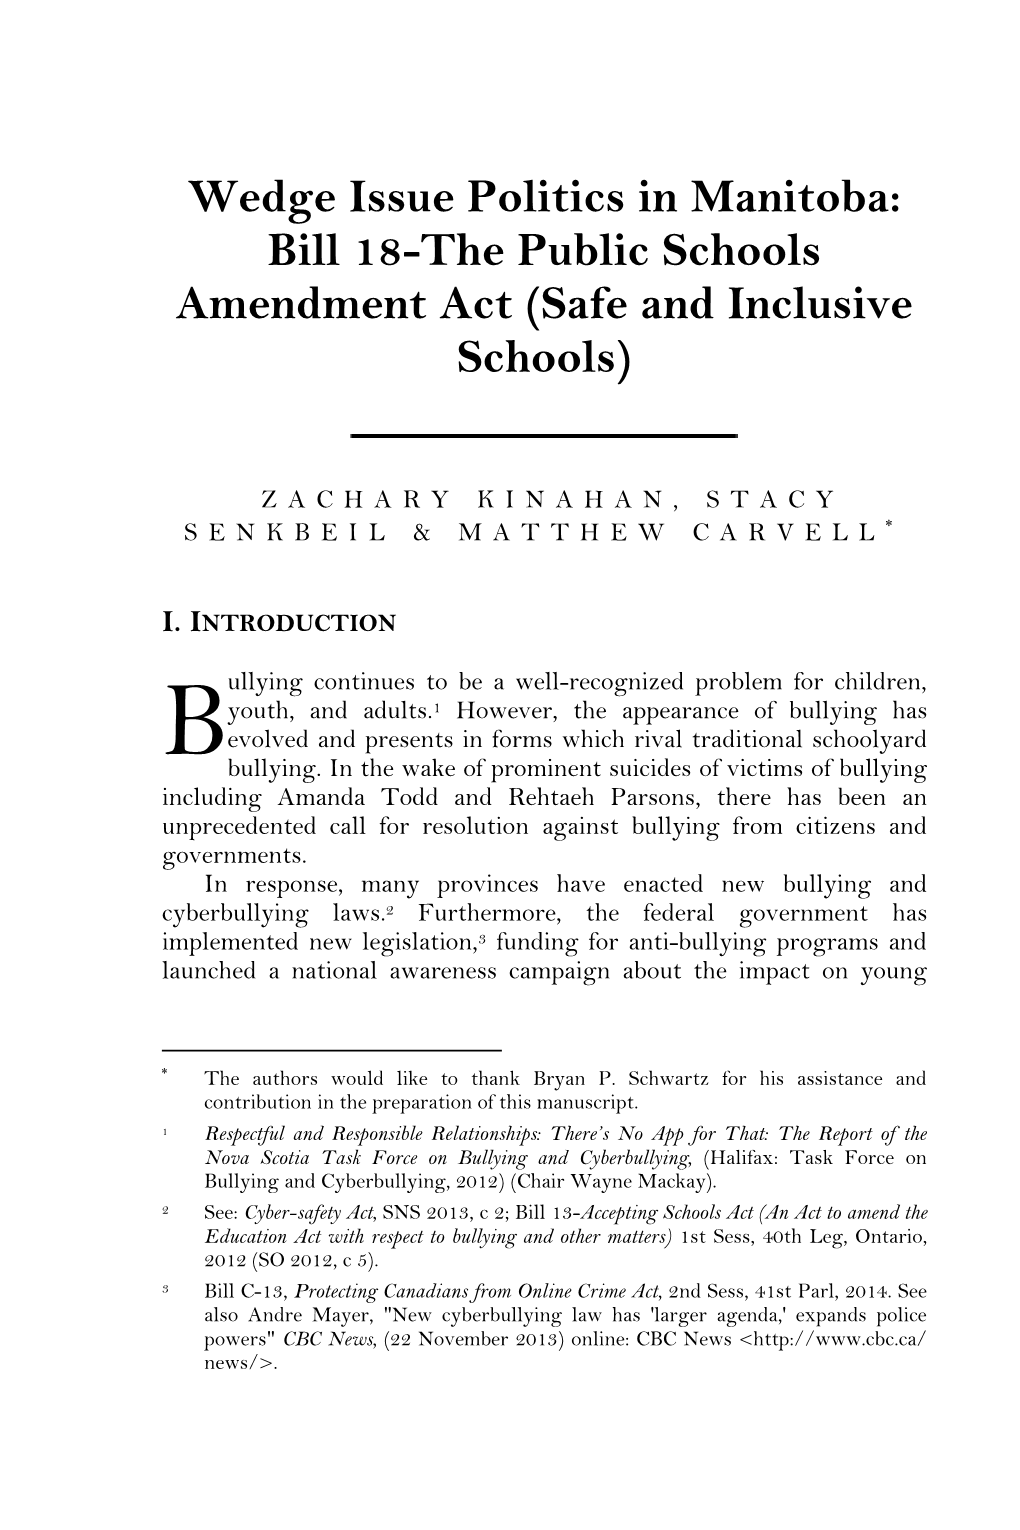 Wedge Issue Politics in Manitoba: Bill 18-The Public Schools Amendment Act (Safe and Inclusive Schools)